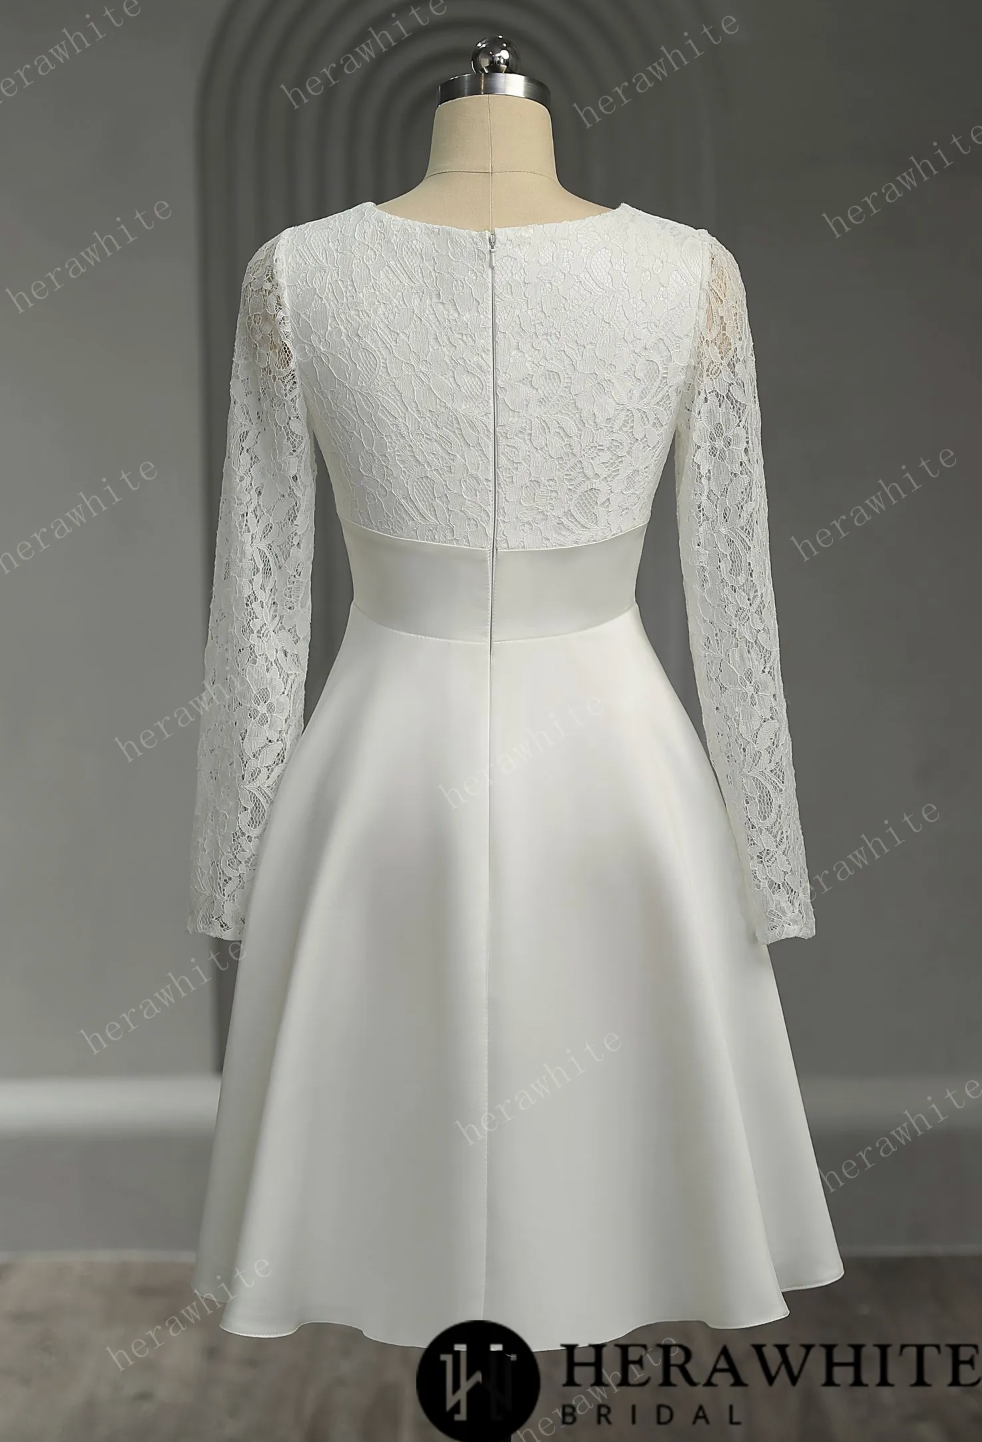 Classic V Neck Lace Short Wedding Dress